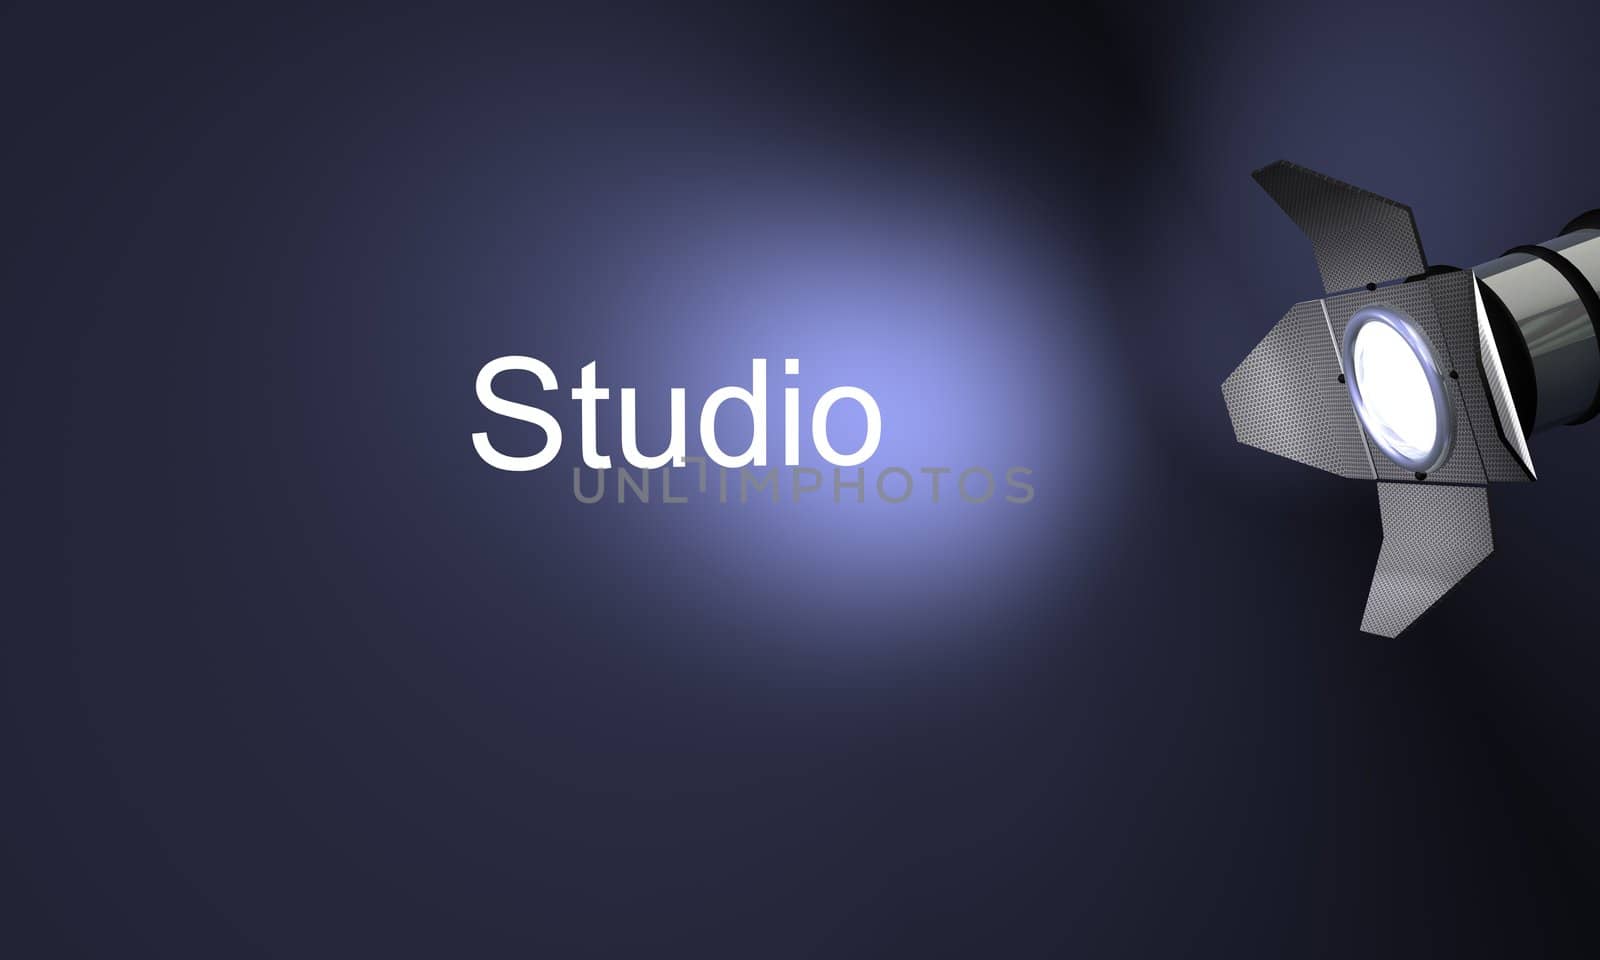 Studio with text studio on blue background